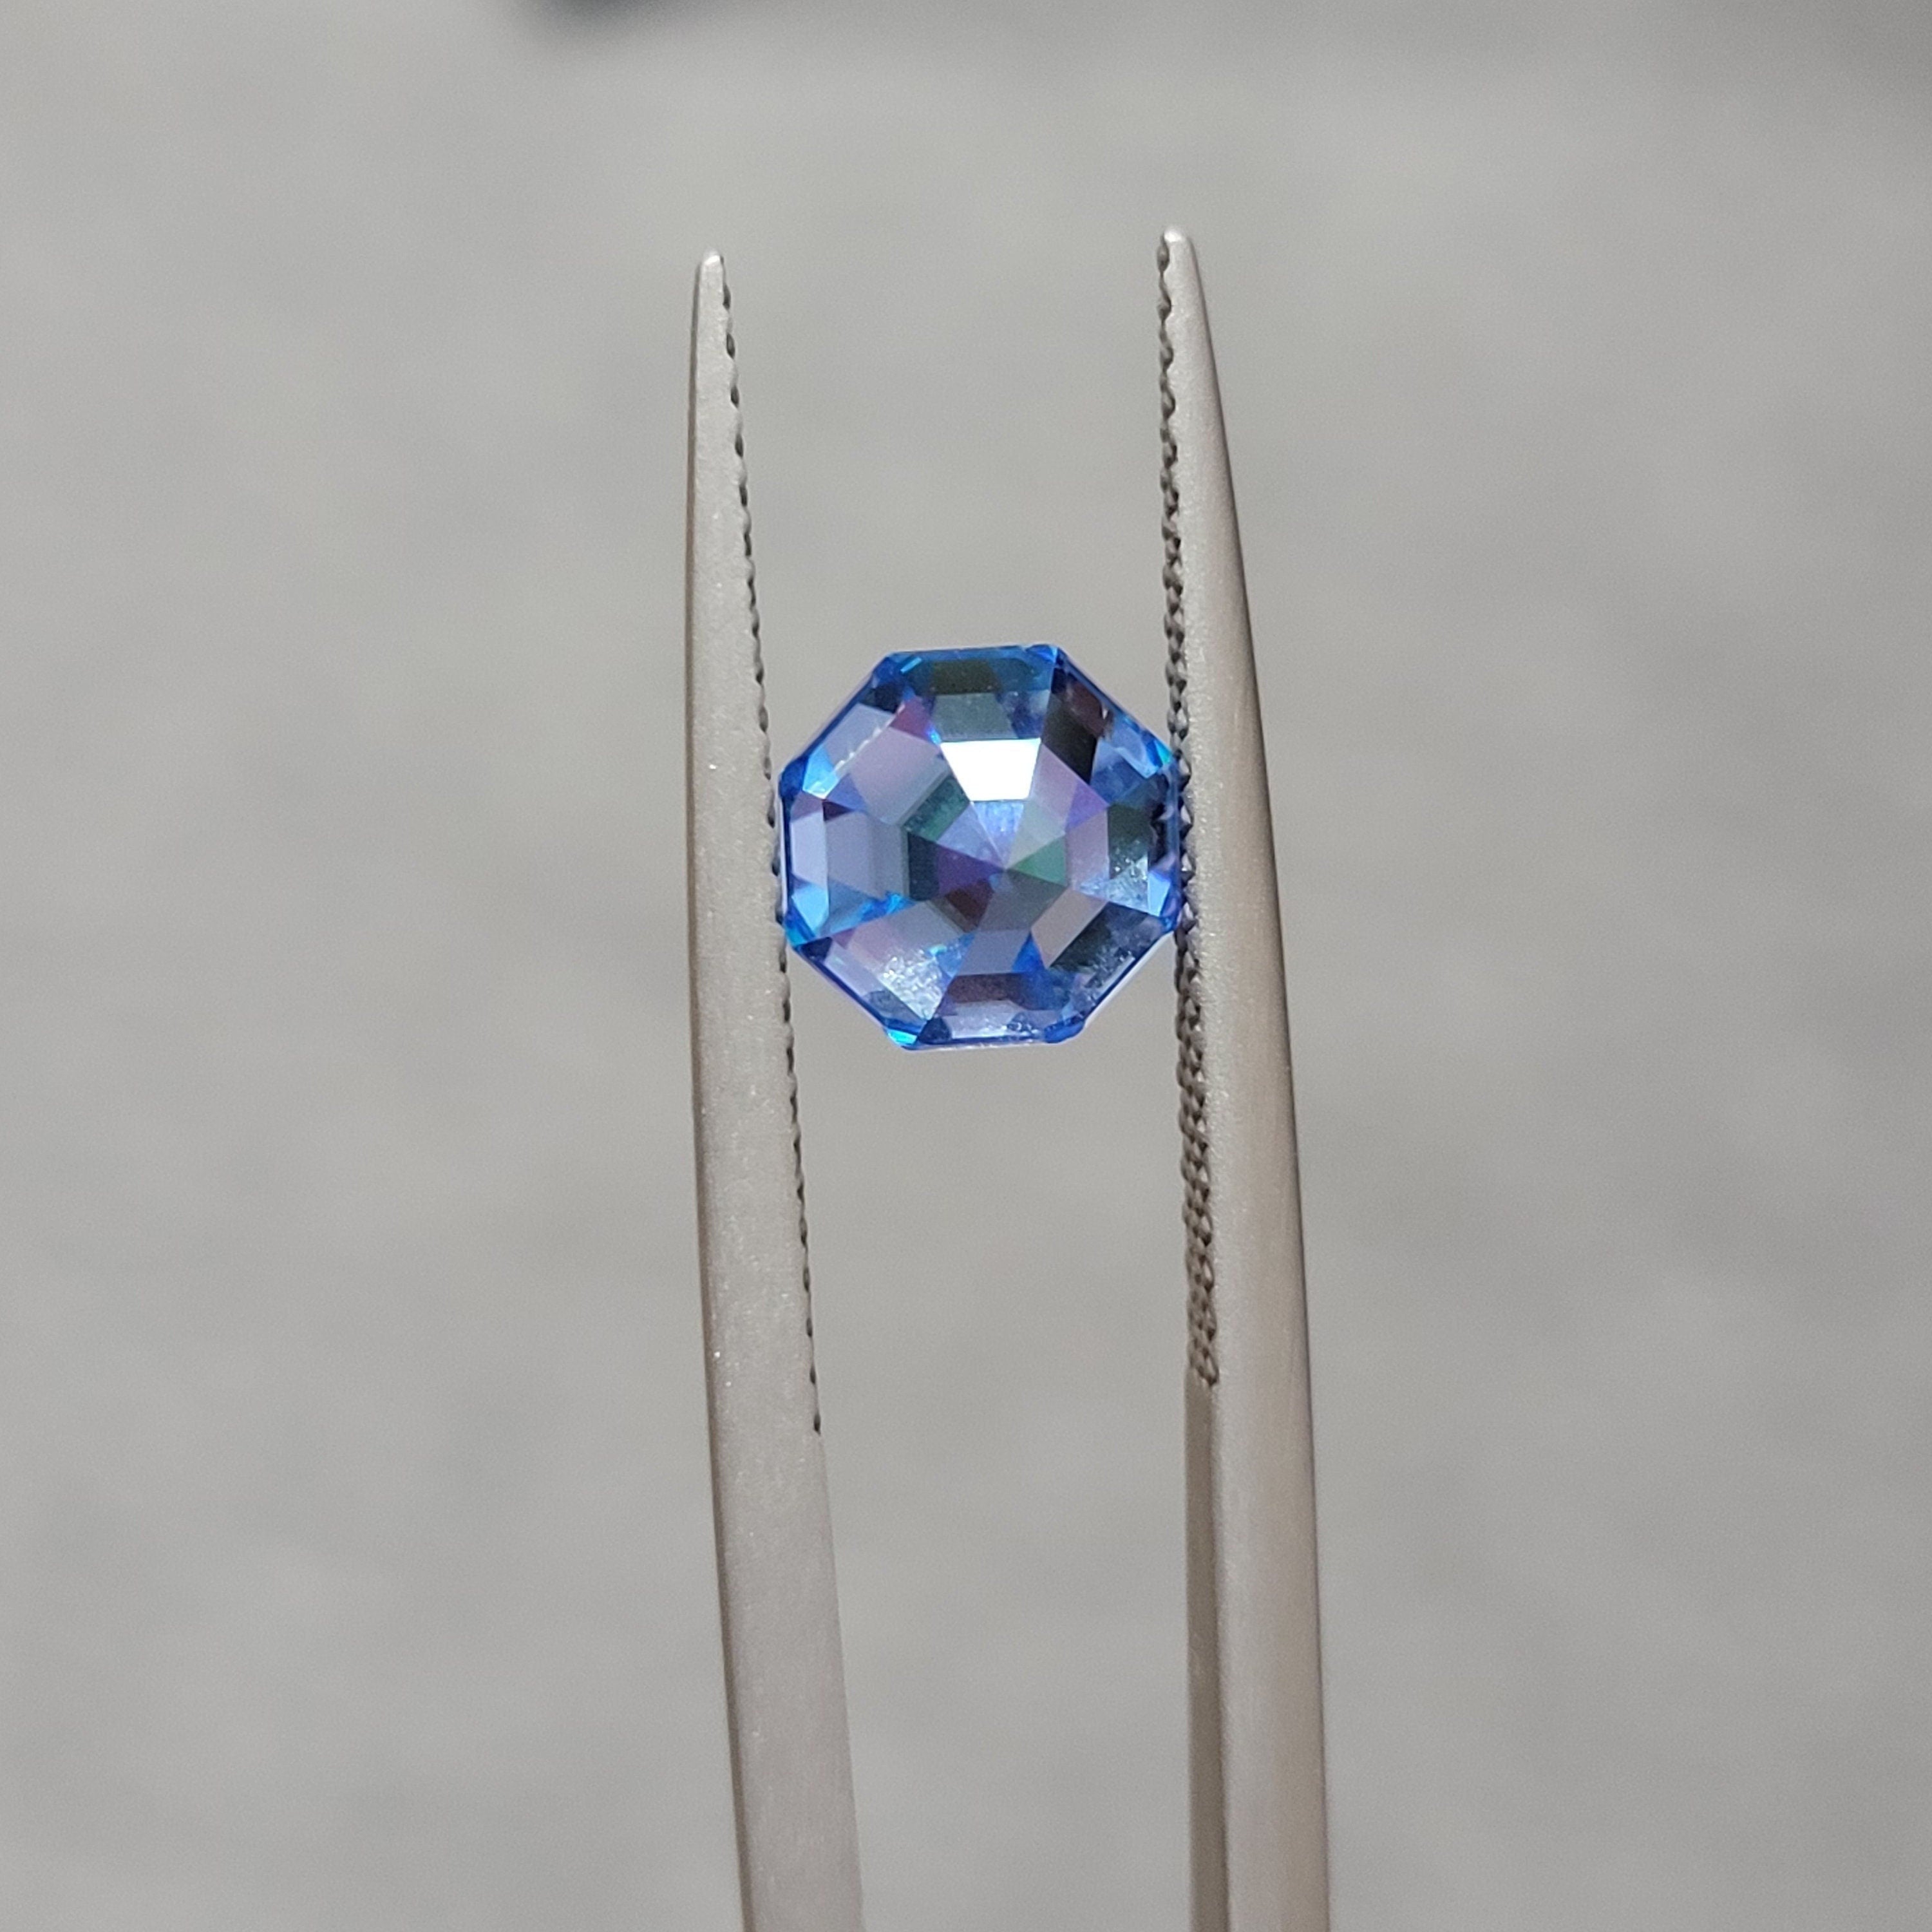 7mm 2ct loose moissanite certified vvs1 klein blue octagon cut gra laboratory gemstone